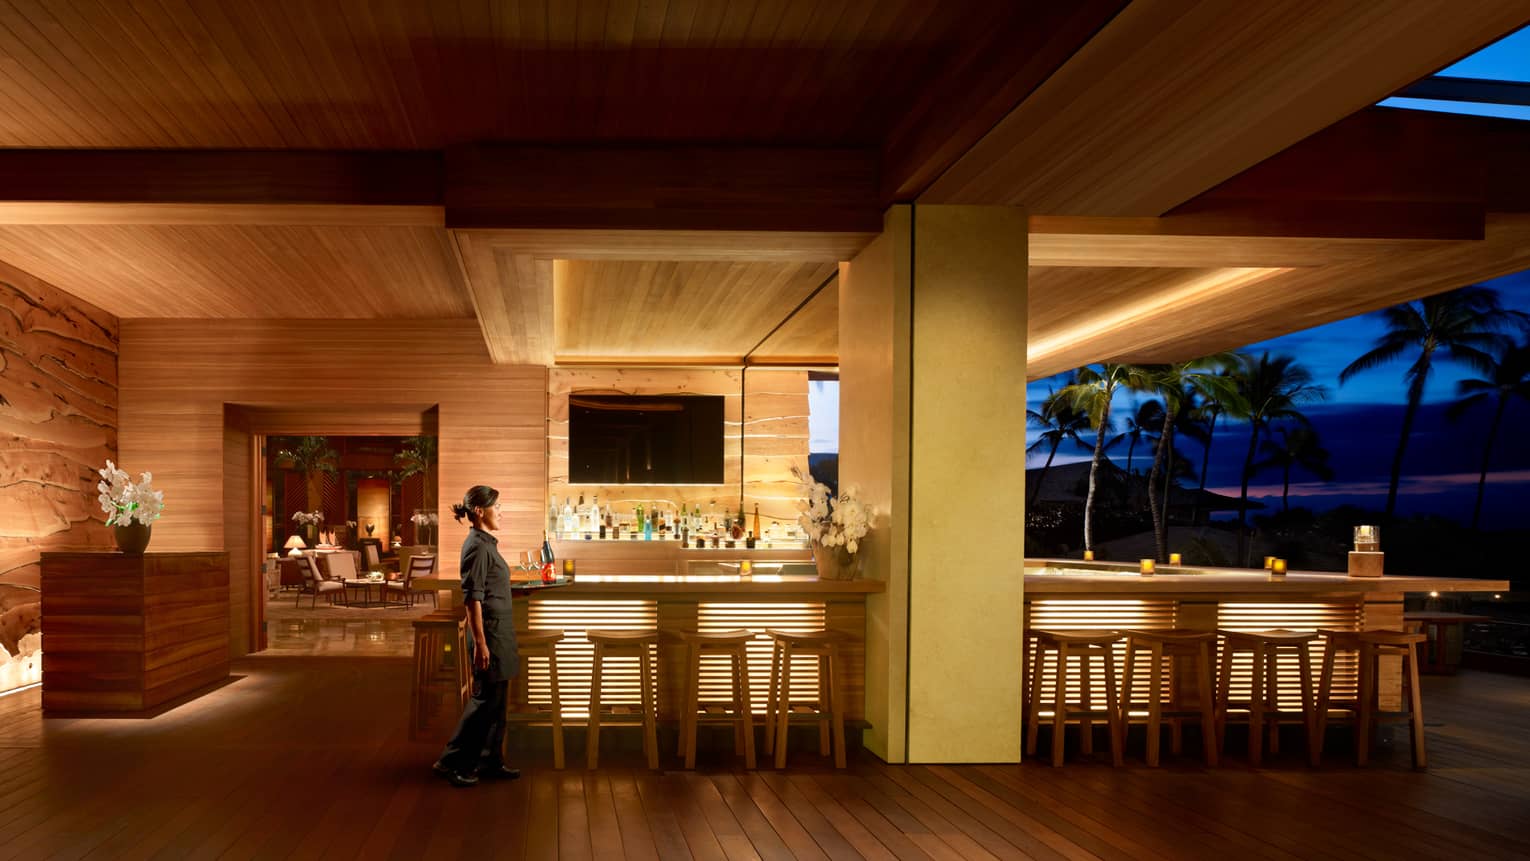 Server walks by wood NOBU Lanai restaurant bar with lights on indoor outdoor patio at night